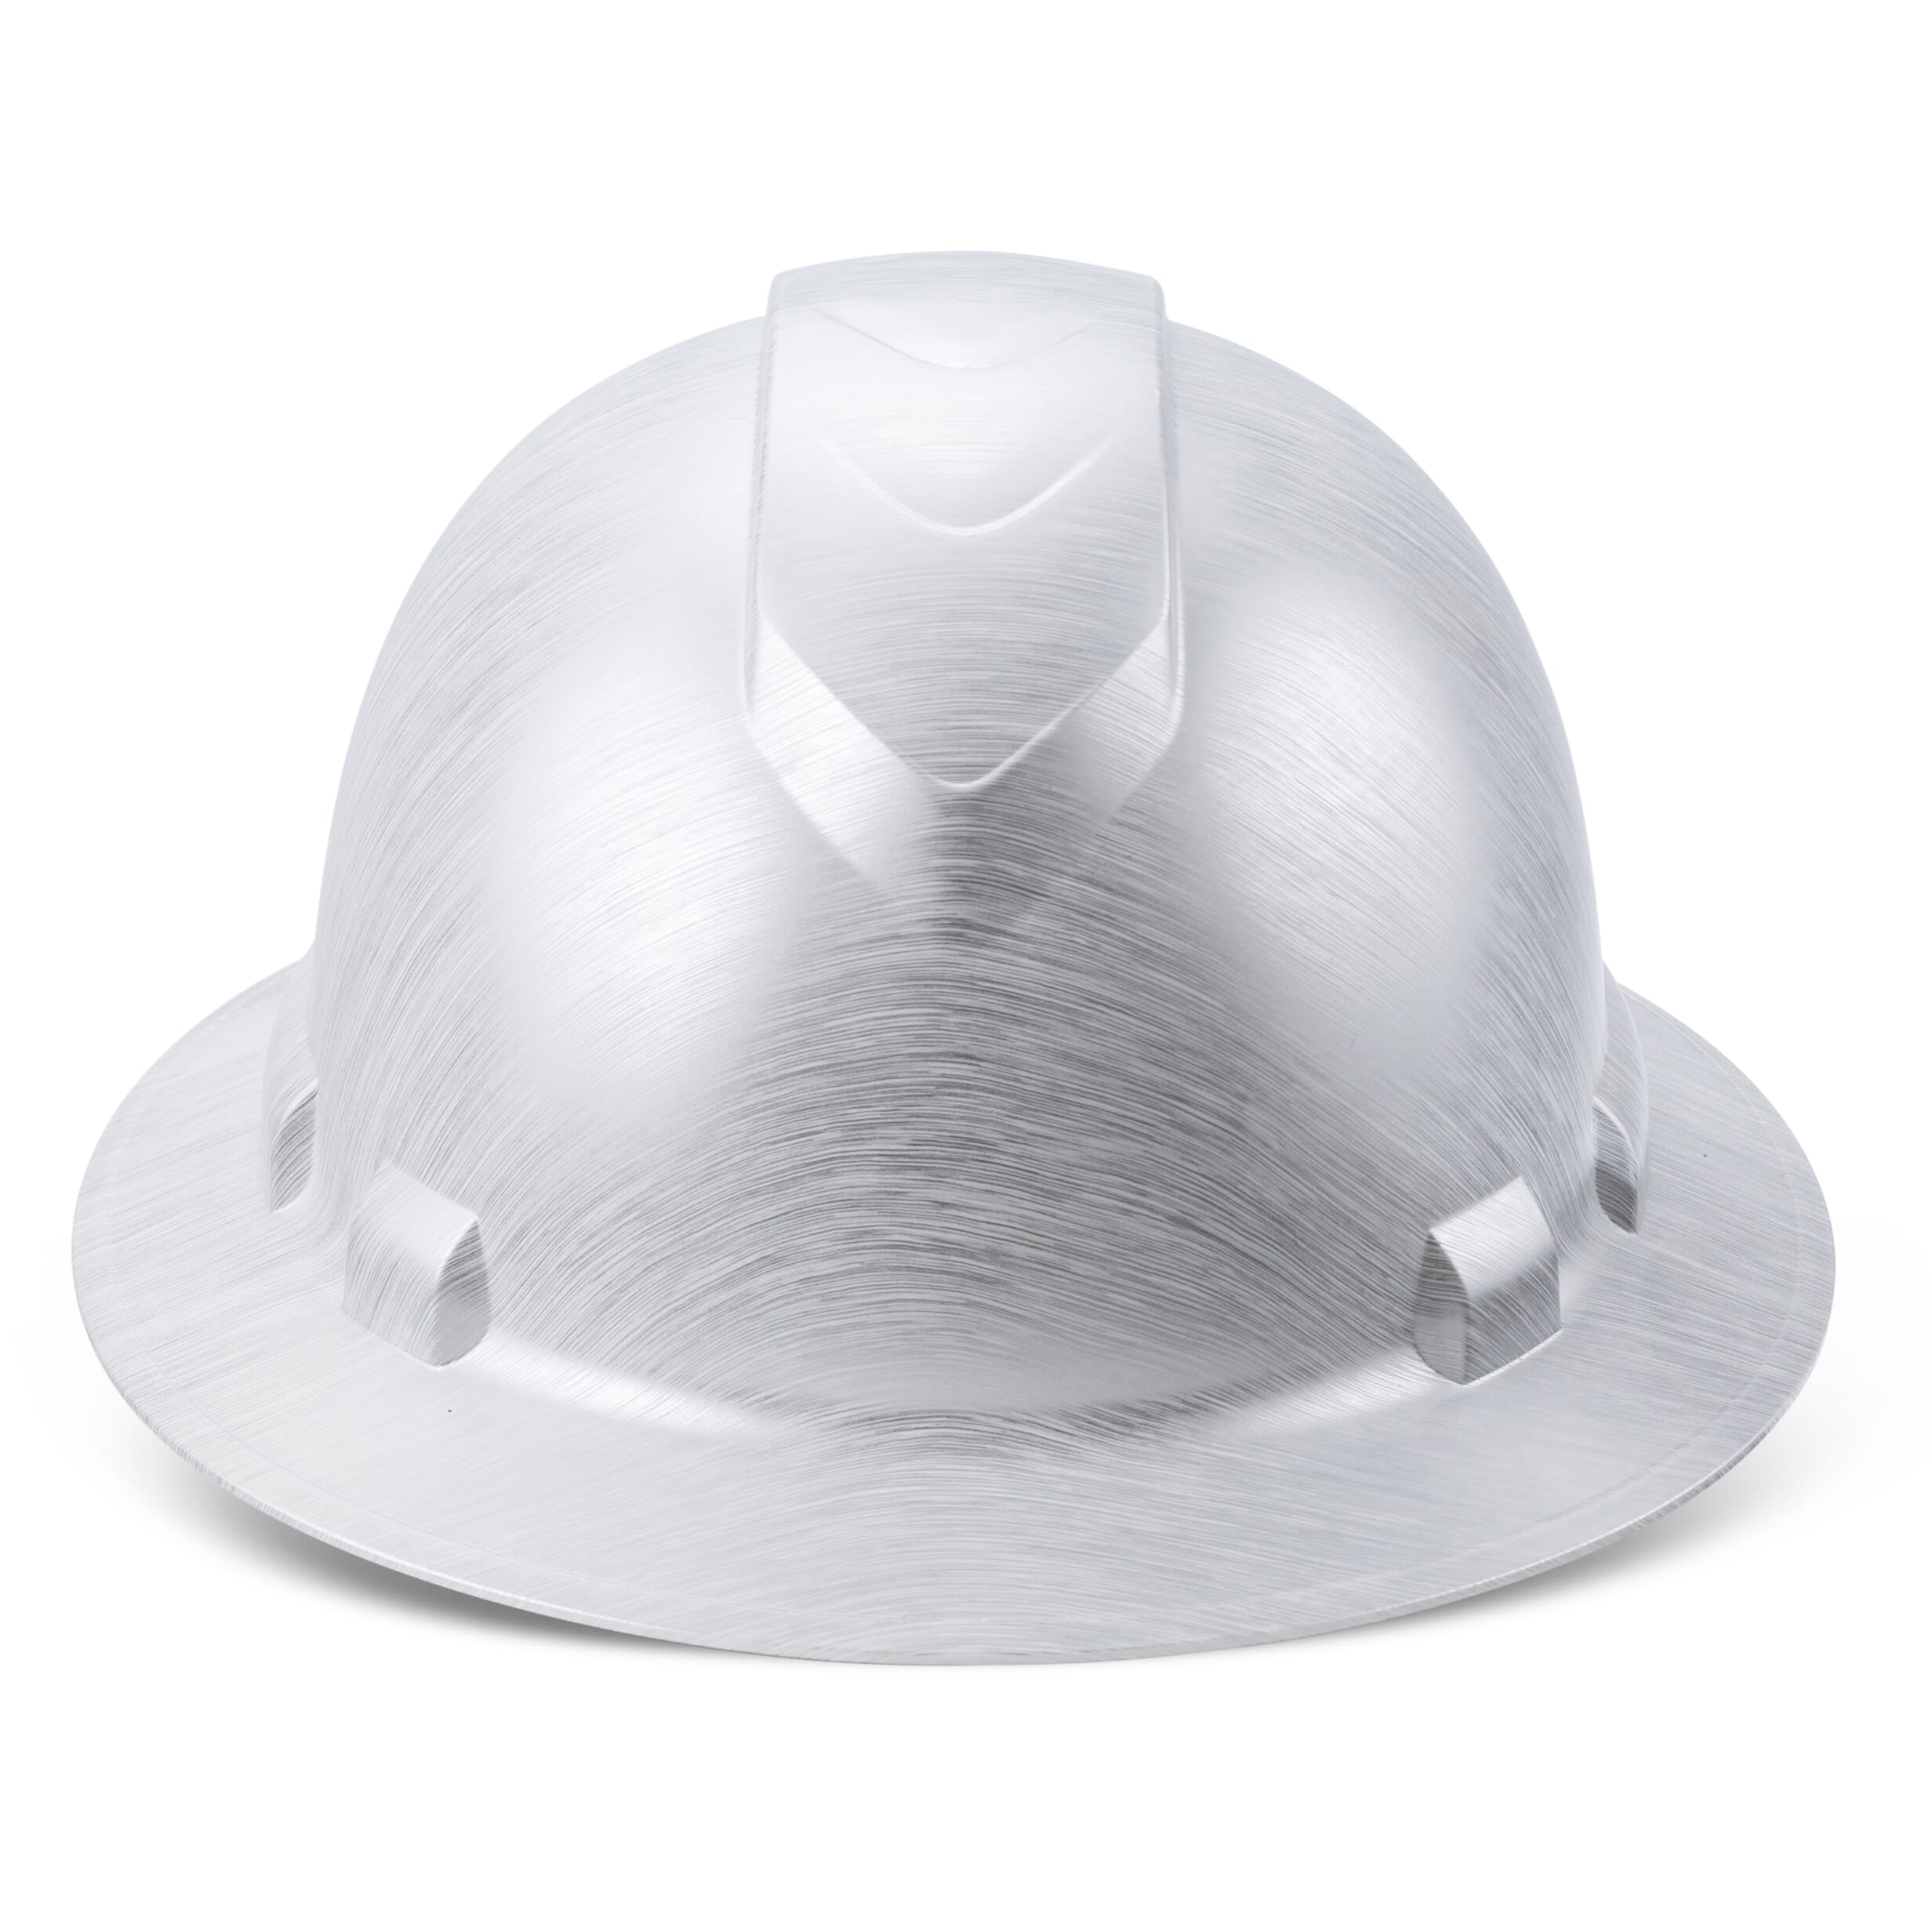 Full Brim Pyramex Hard Hat, Custom Arctic Etching Design, Safety Helmet, 6 Point